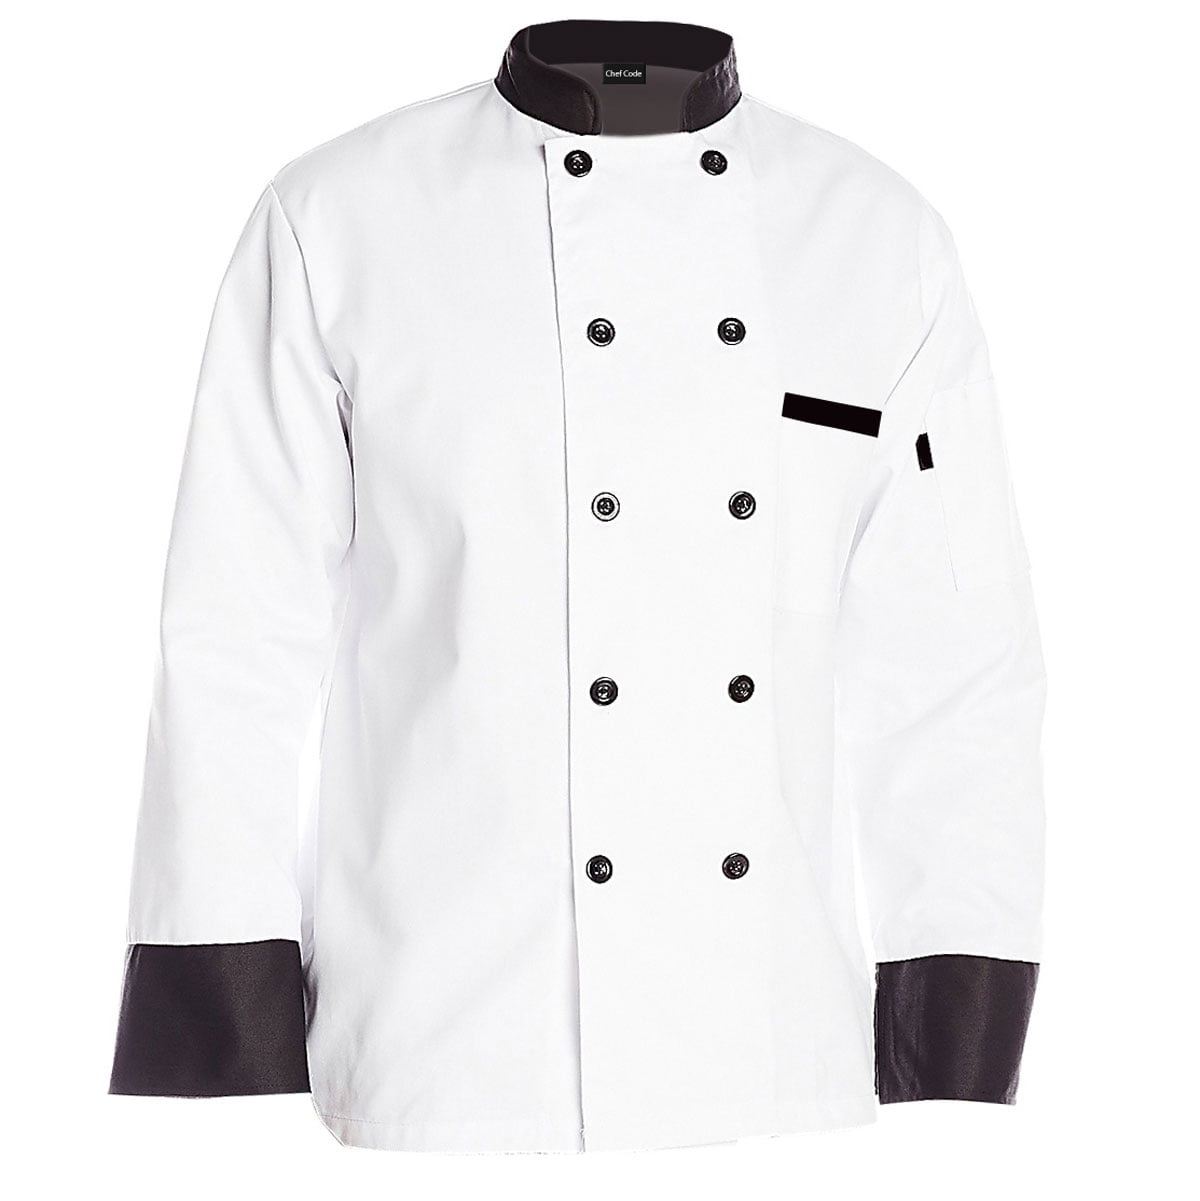 Chef Code Executive Chef Coat 12 Button Unisex Chef Jacket CC103 